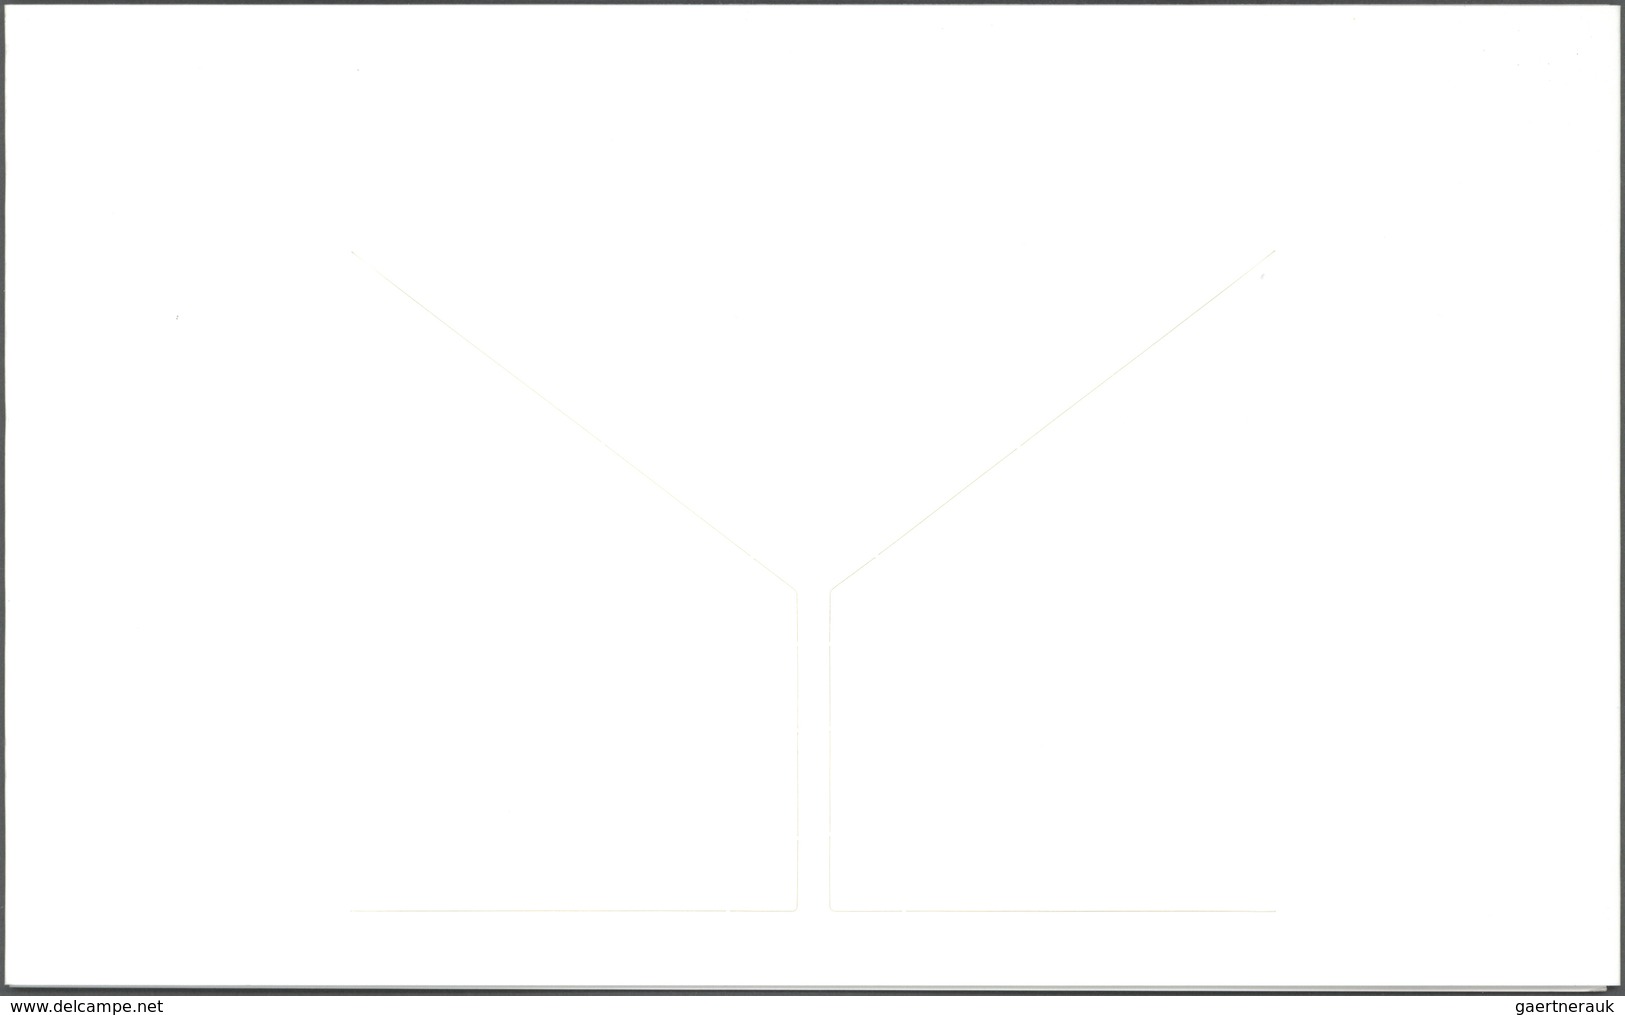 02654 Testbanknoten: Beautiful Test Note OEBS Austria Featuring "Gustav Klimt", Intaglio Printed On Real B - Ficción & Especímenes